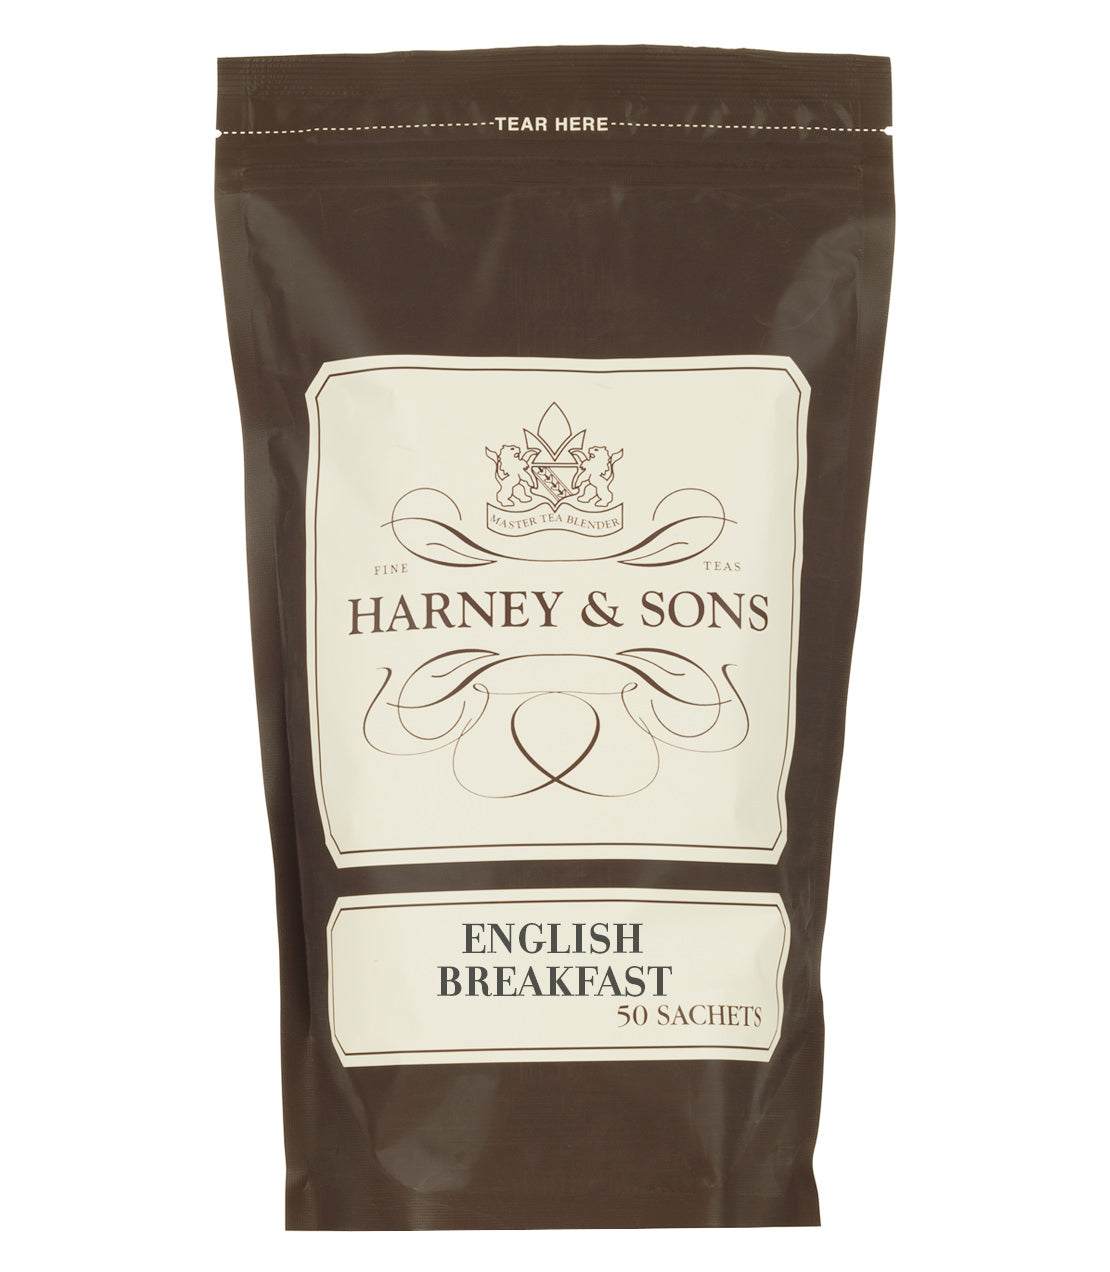 English Breakfast - Sachets Bag of 50 Sachets - Harney & Sons Fine Teas